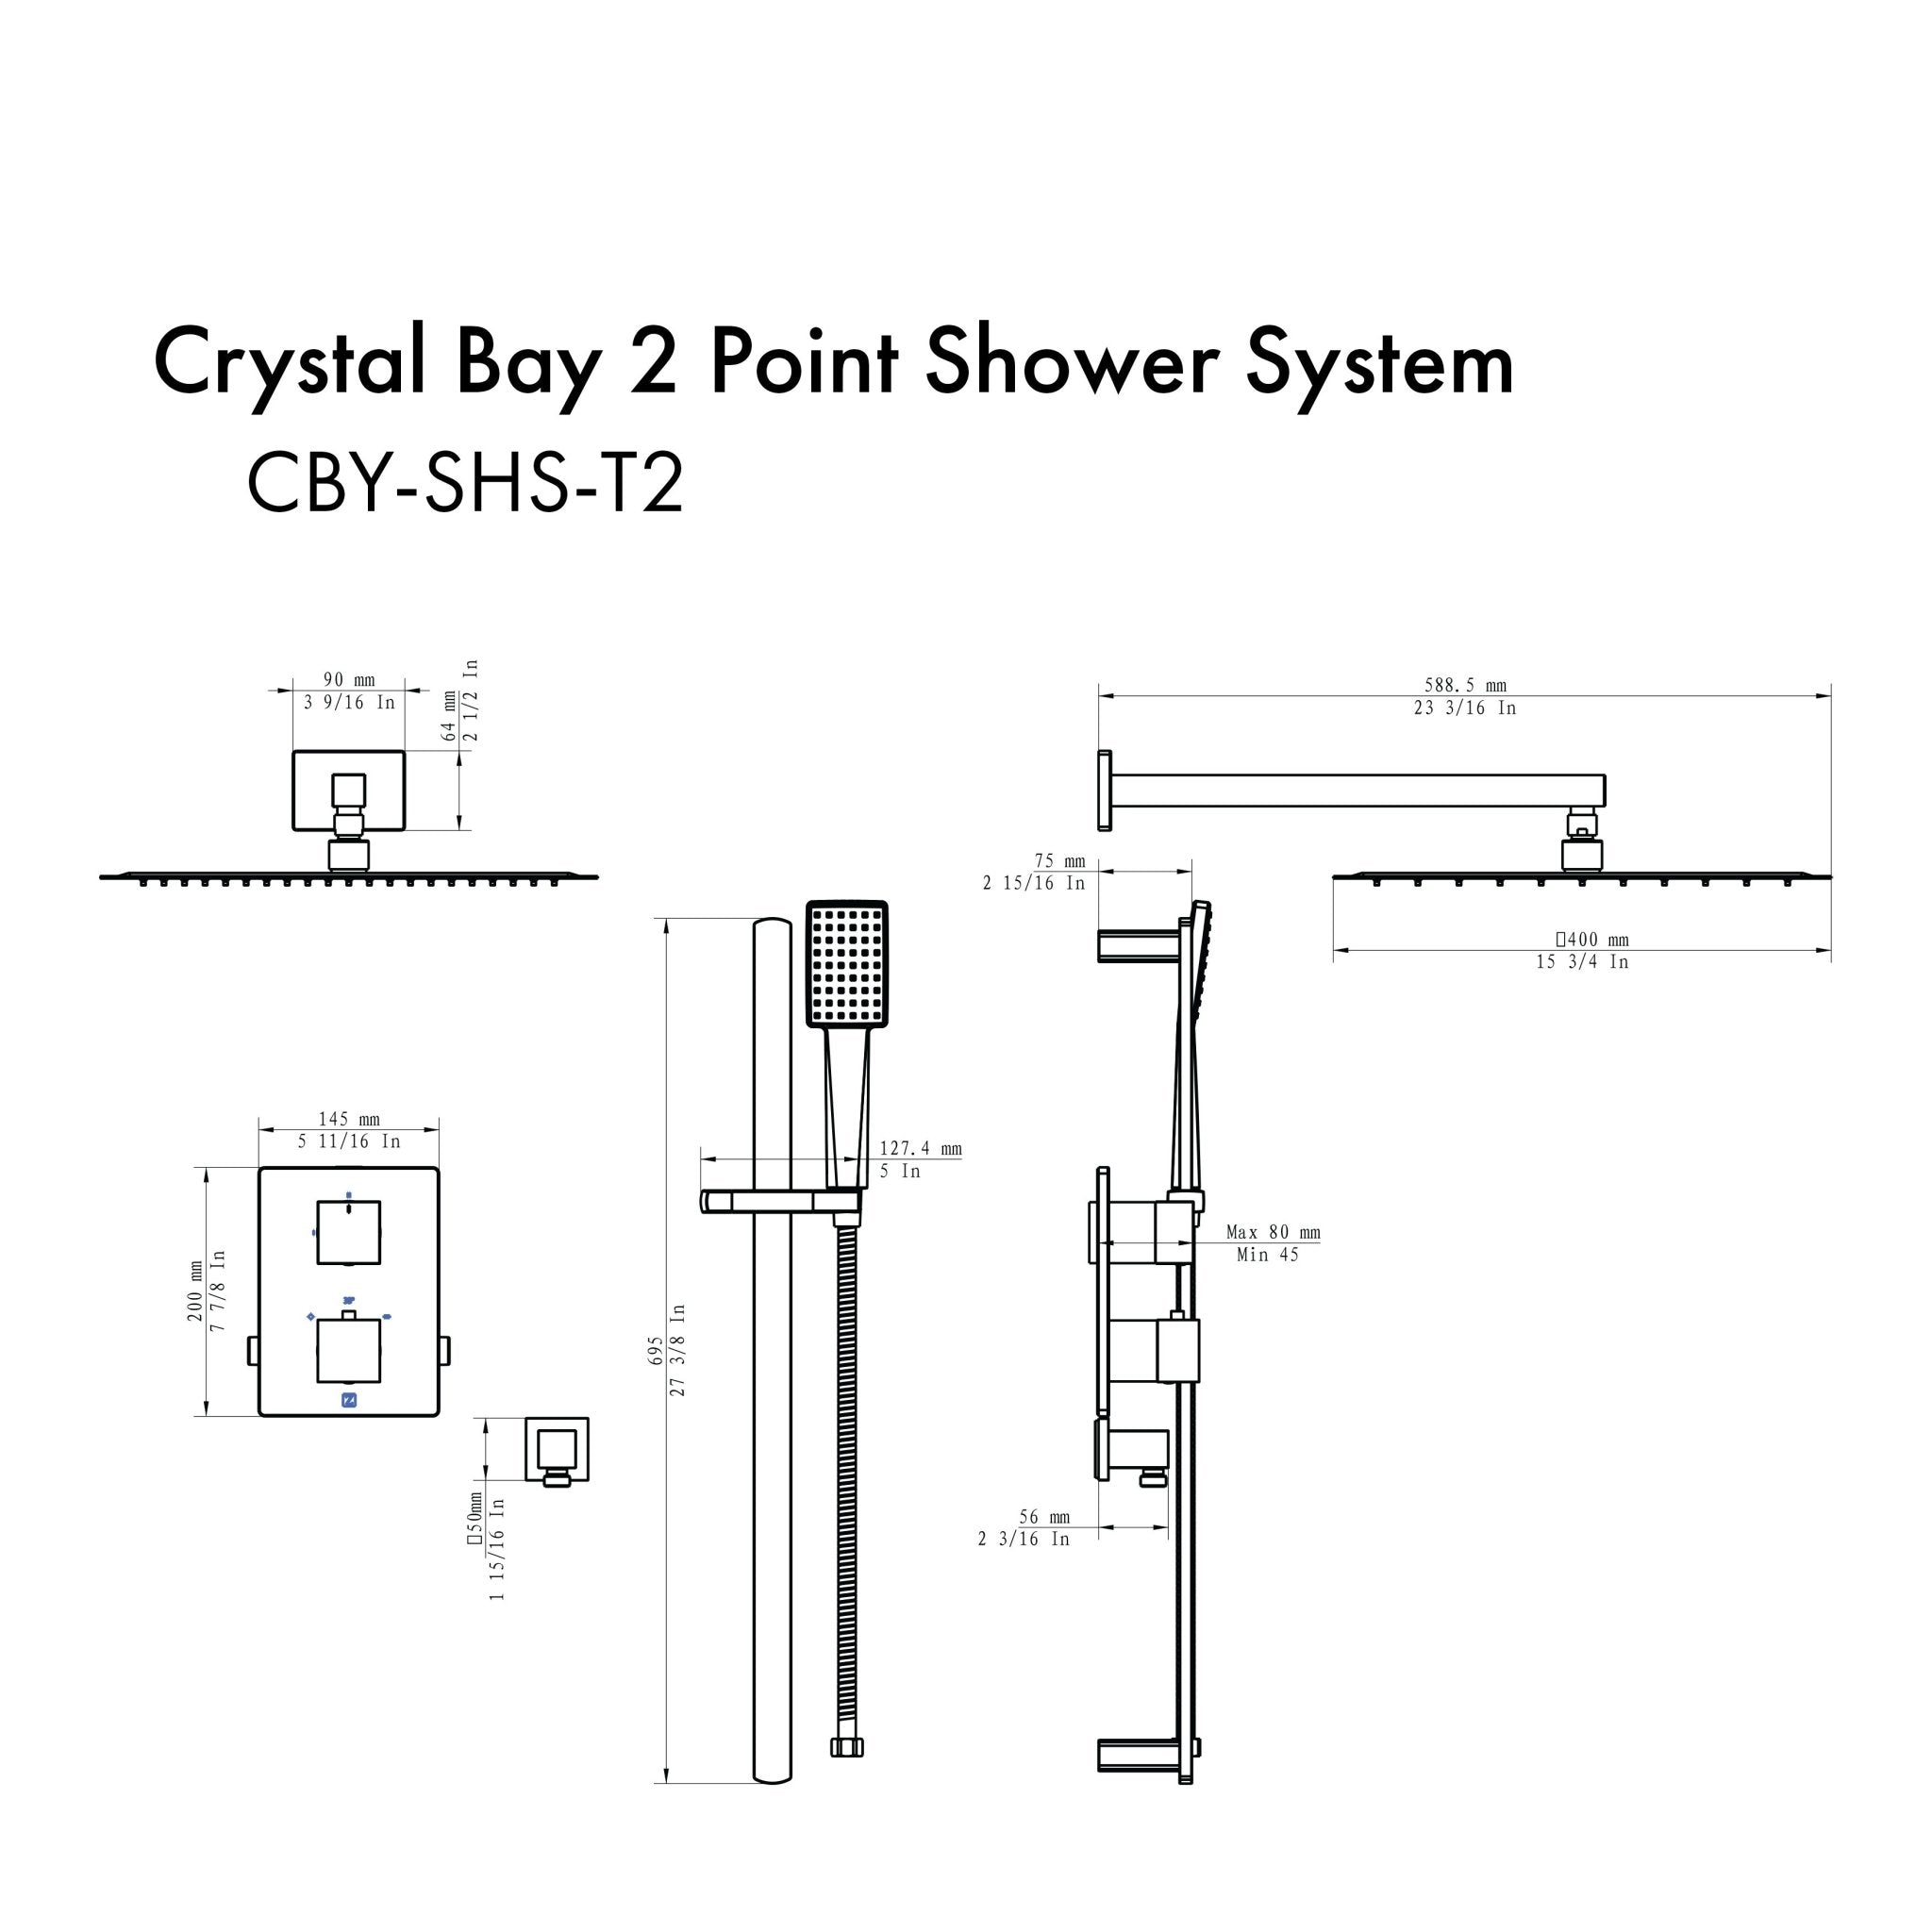 ZLINE Crystal Bay Thermostatic Shower System (CBY-SHS-T2) dimensional diagram